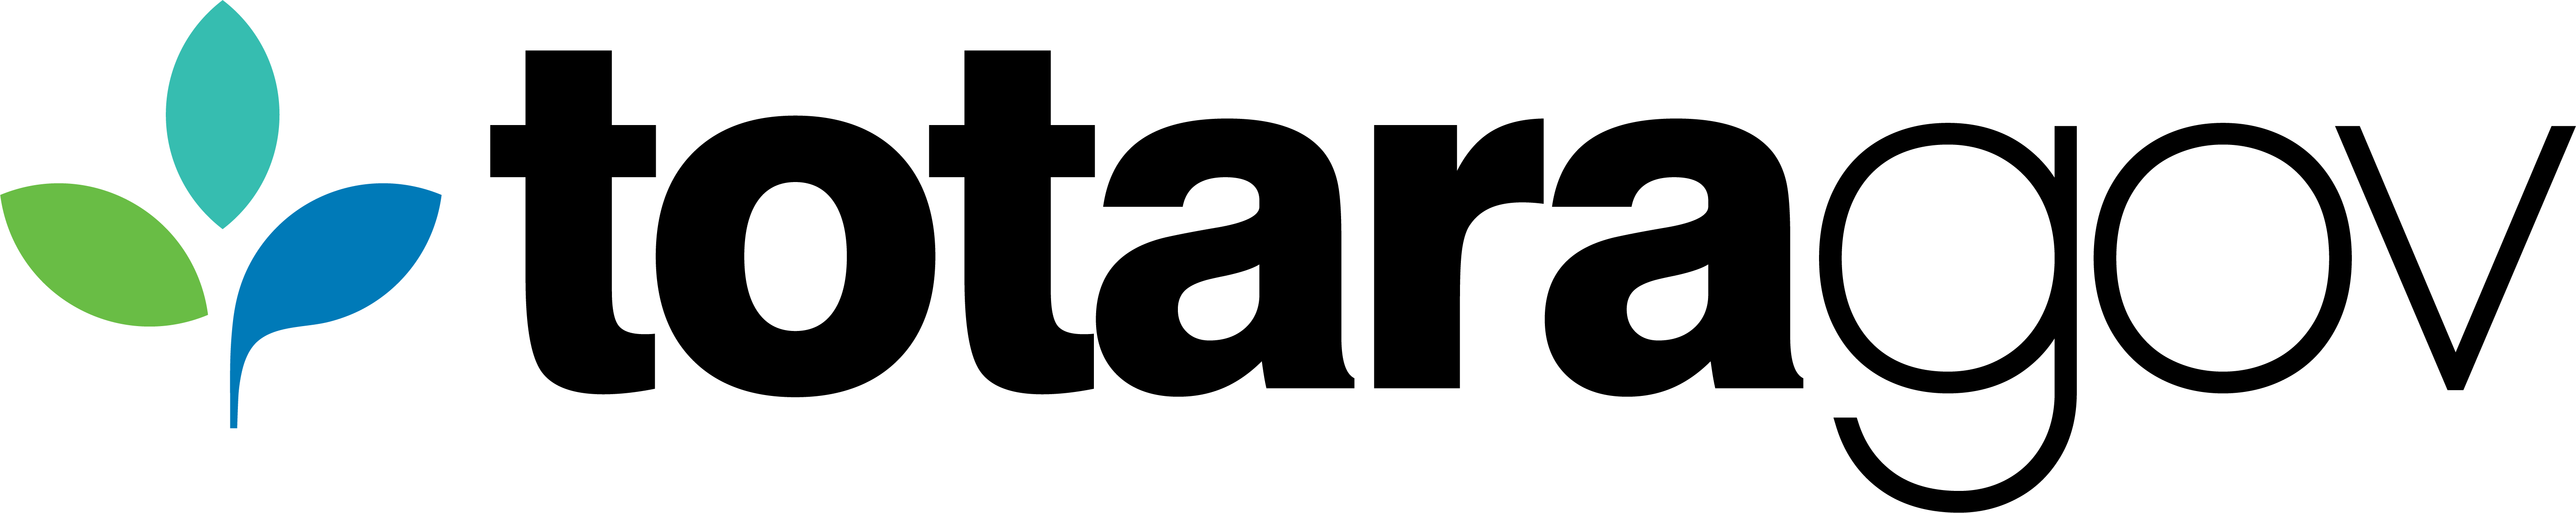 Totara Gov logo